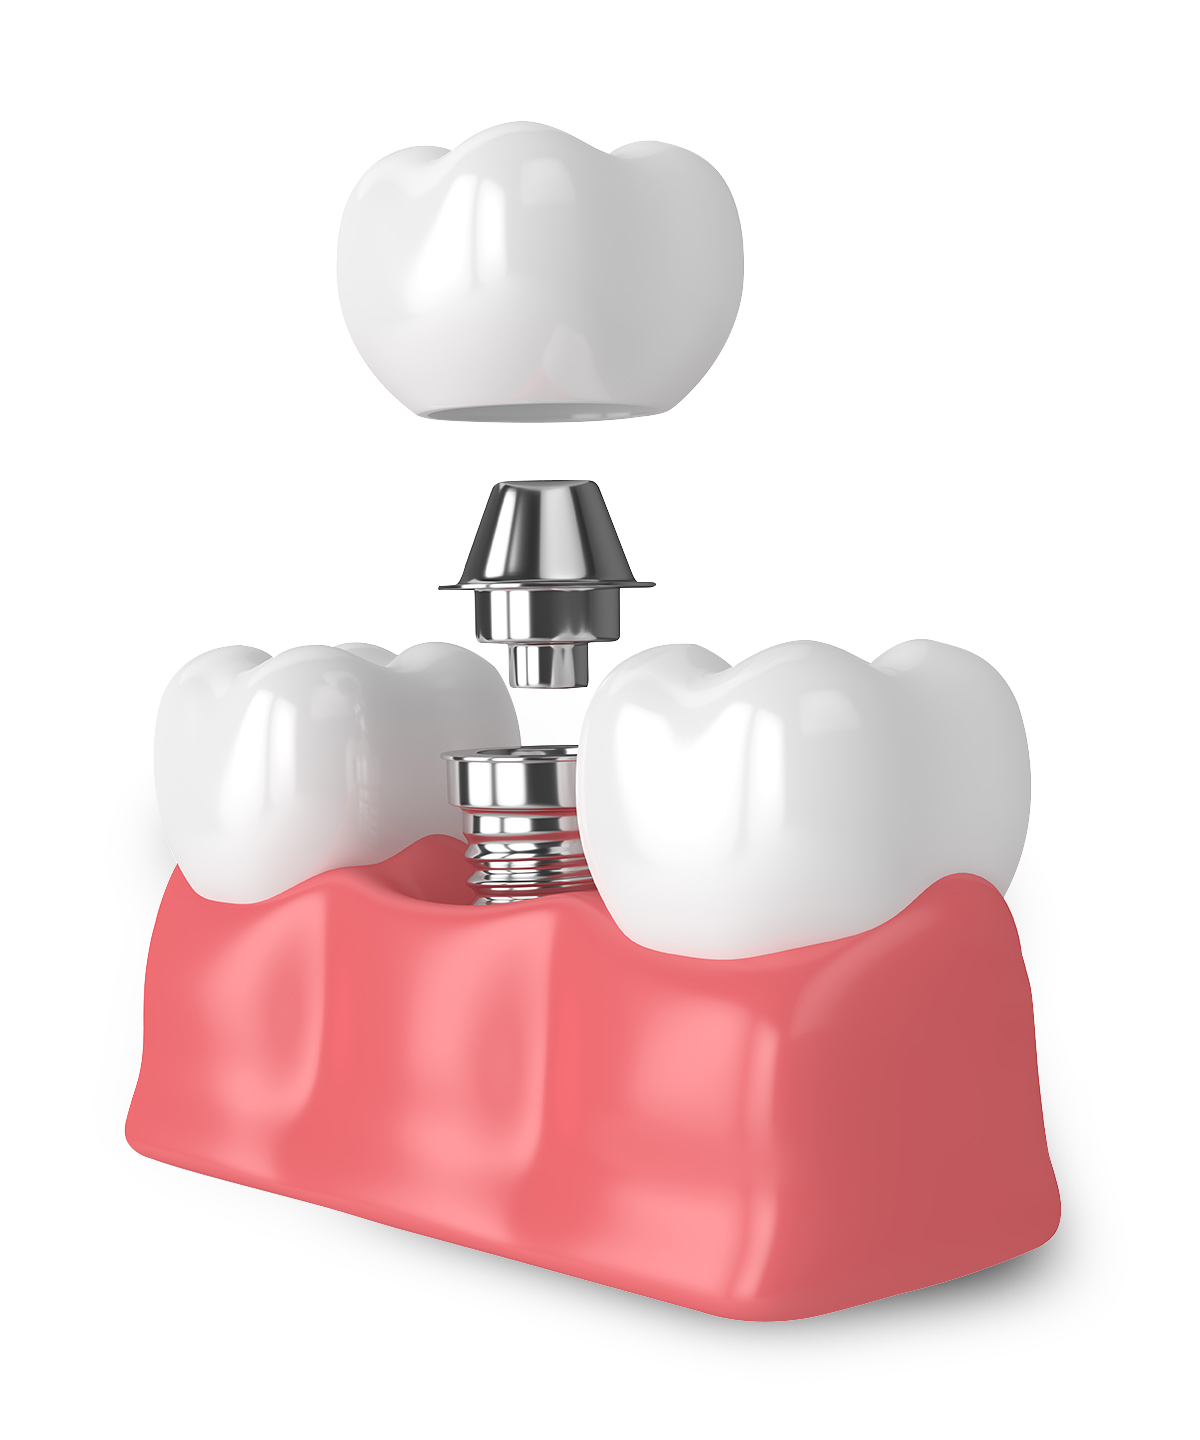 Chattanooga periodontics dental implants